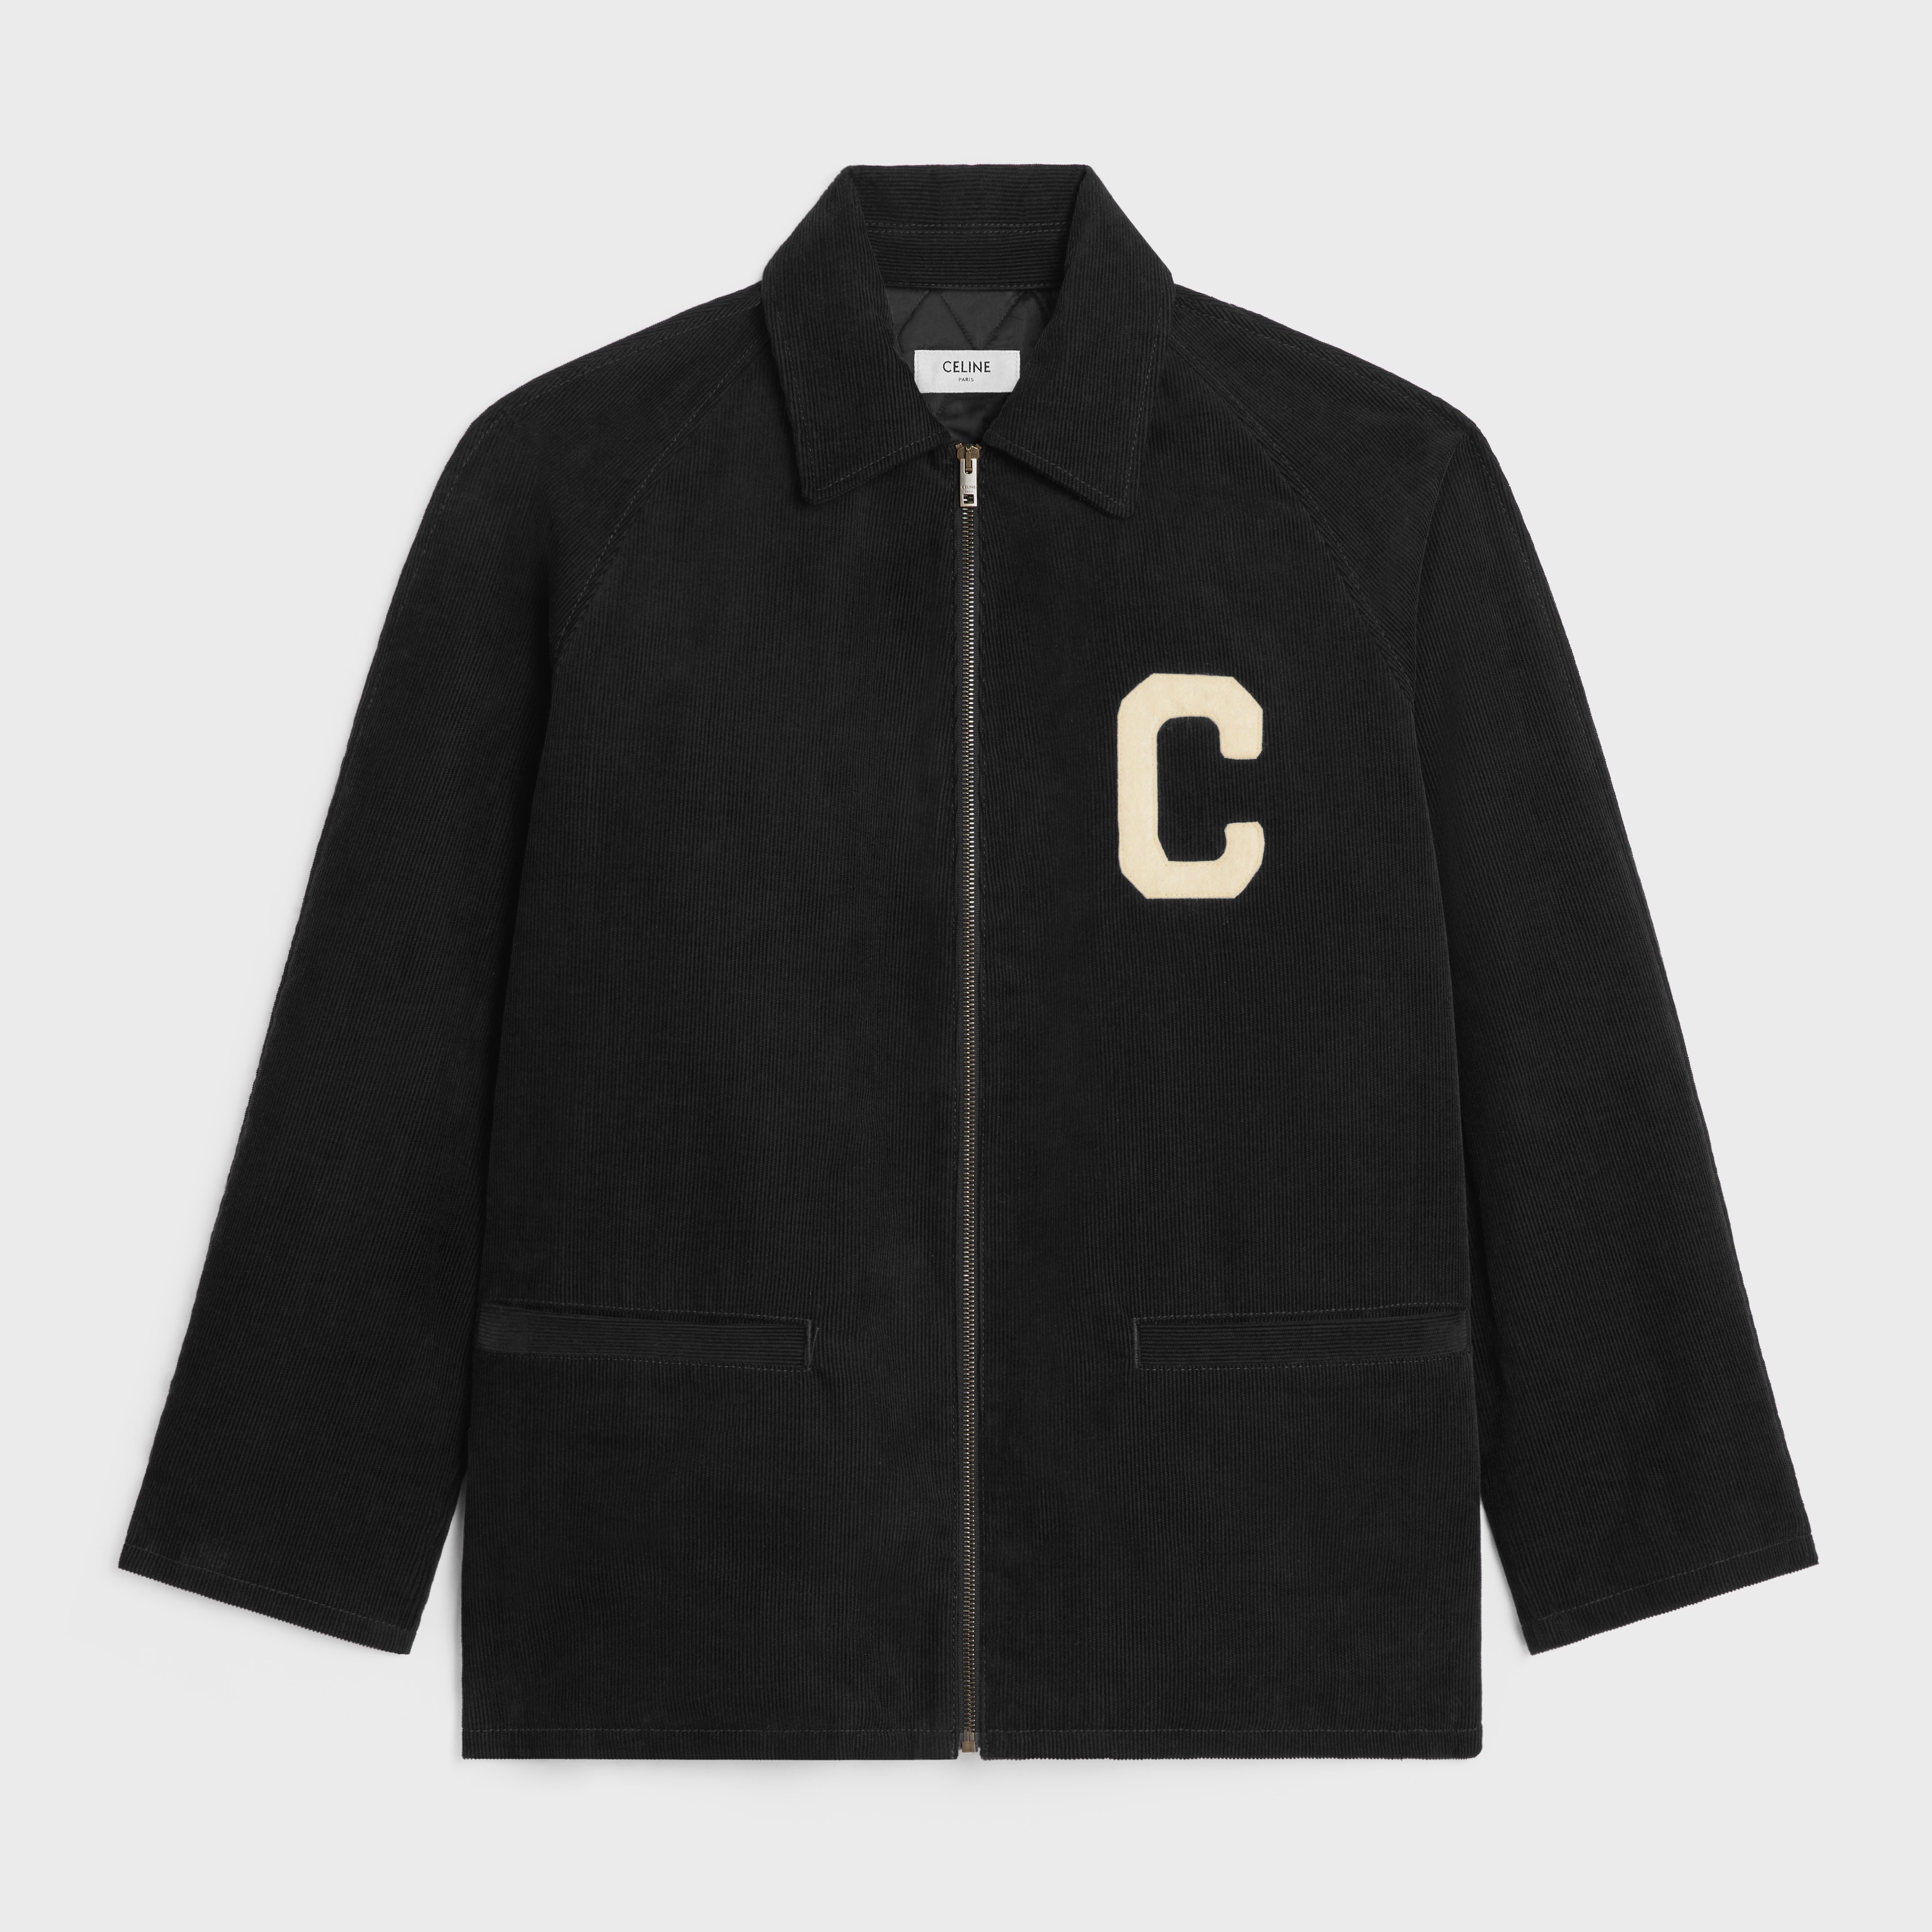 celine jacket in corduroy - 1